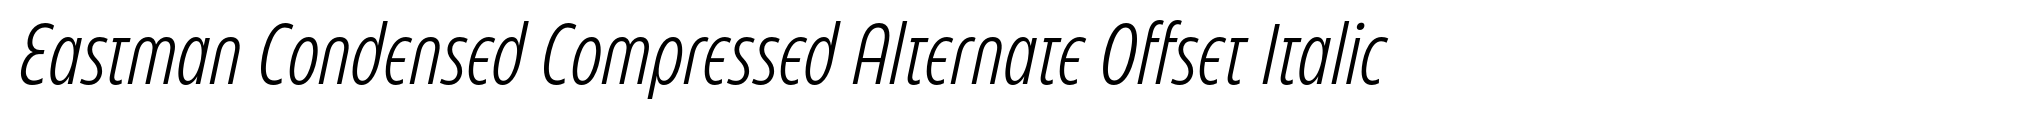 Eastman Condensed Compressed Alternate Offset Italic image